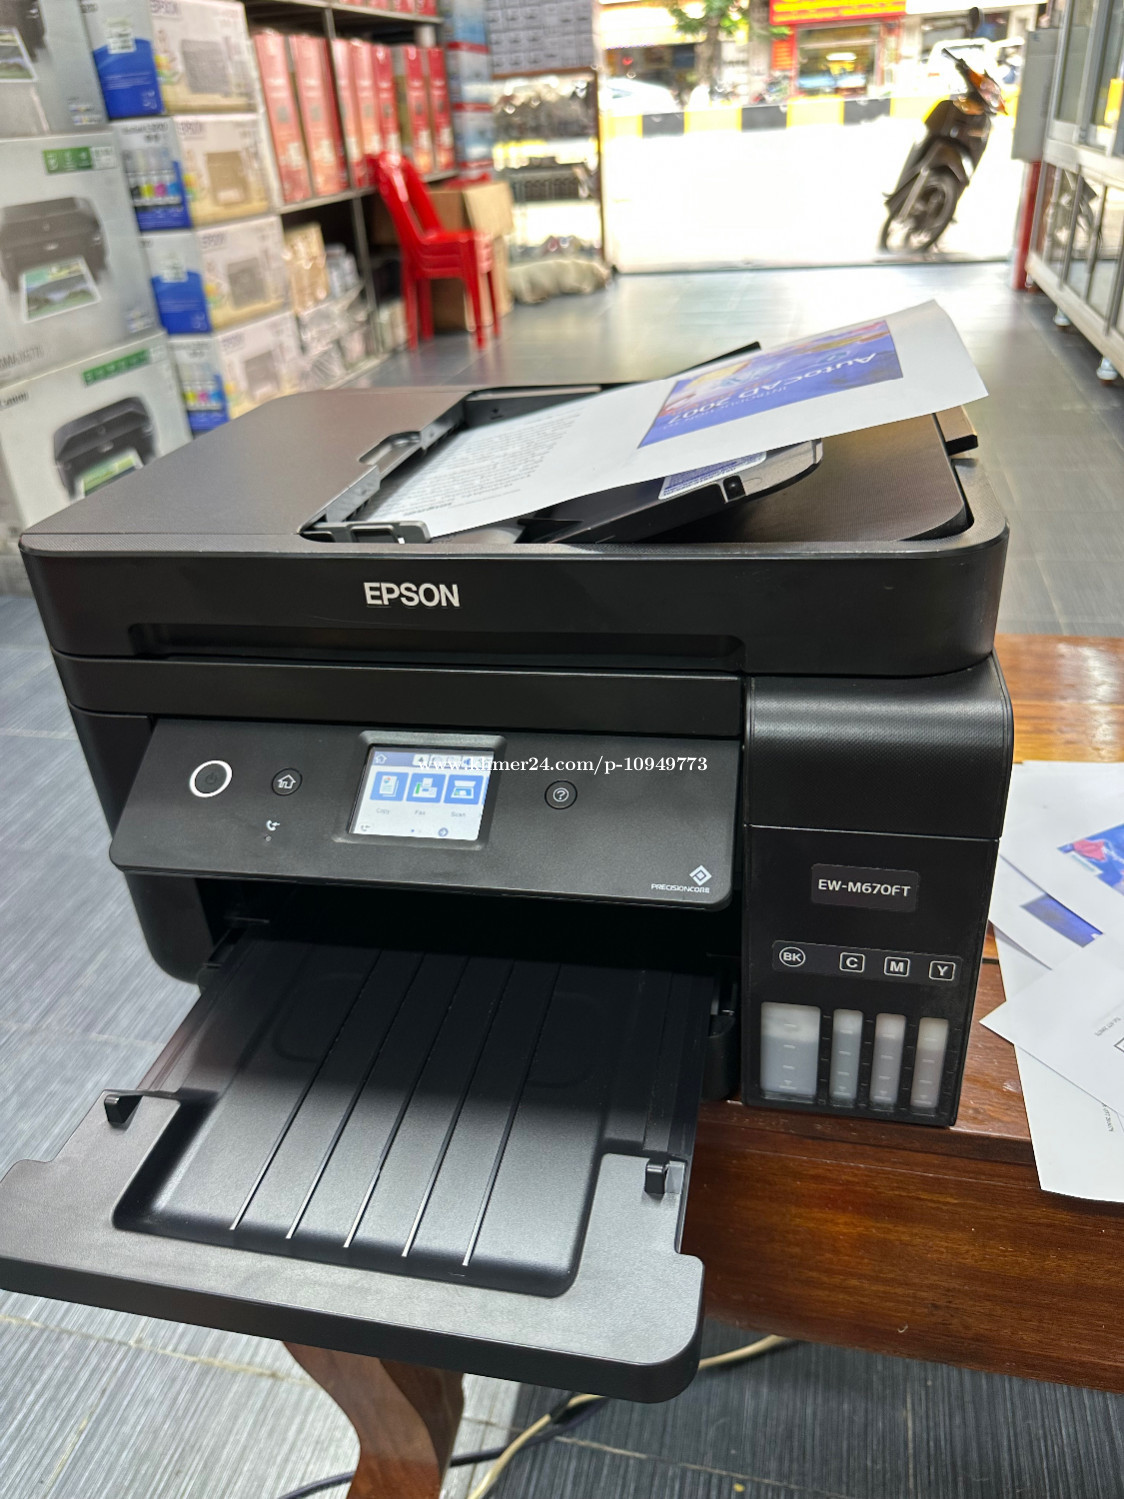 Epson EW-M670FT Print Scan Copy Wi-Fi Wi-Fi Direct មួយទឹក 